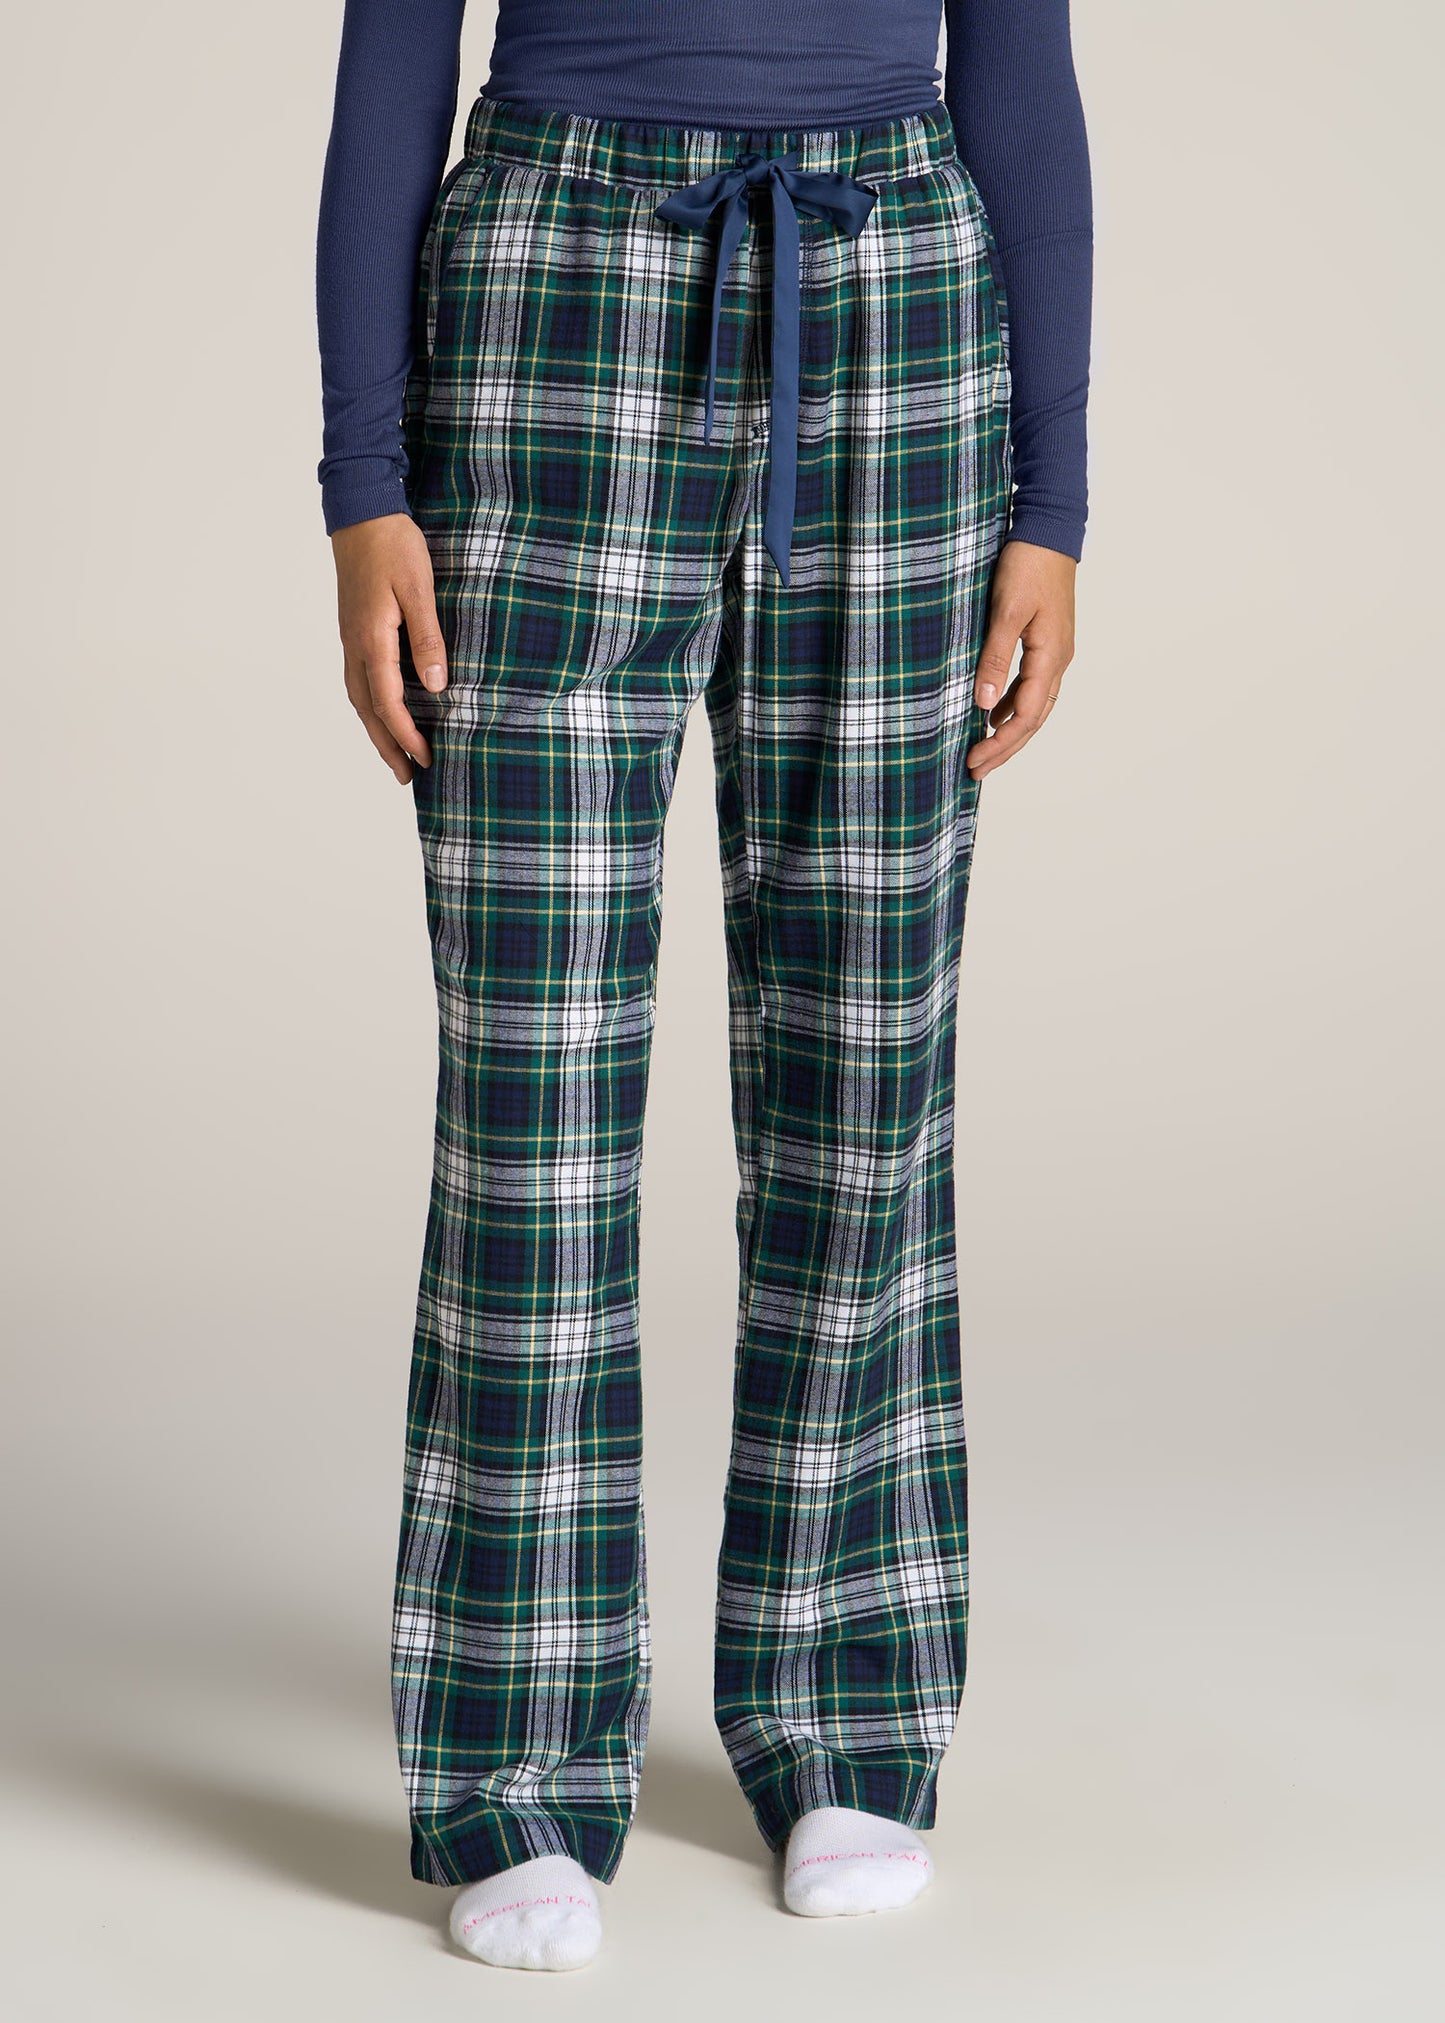 Women's Pajama Pants With Pockets, Women's Soft Flannel Check Pajama Pants